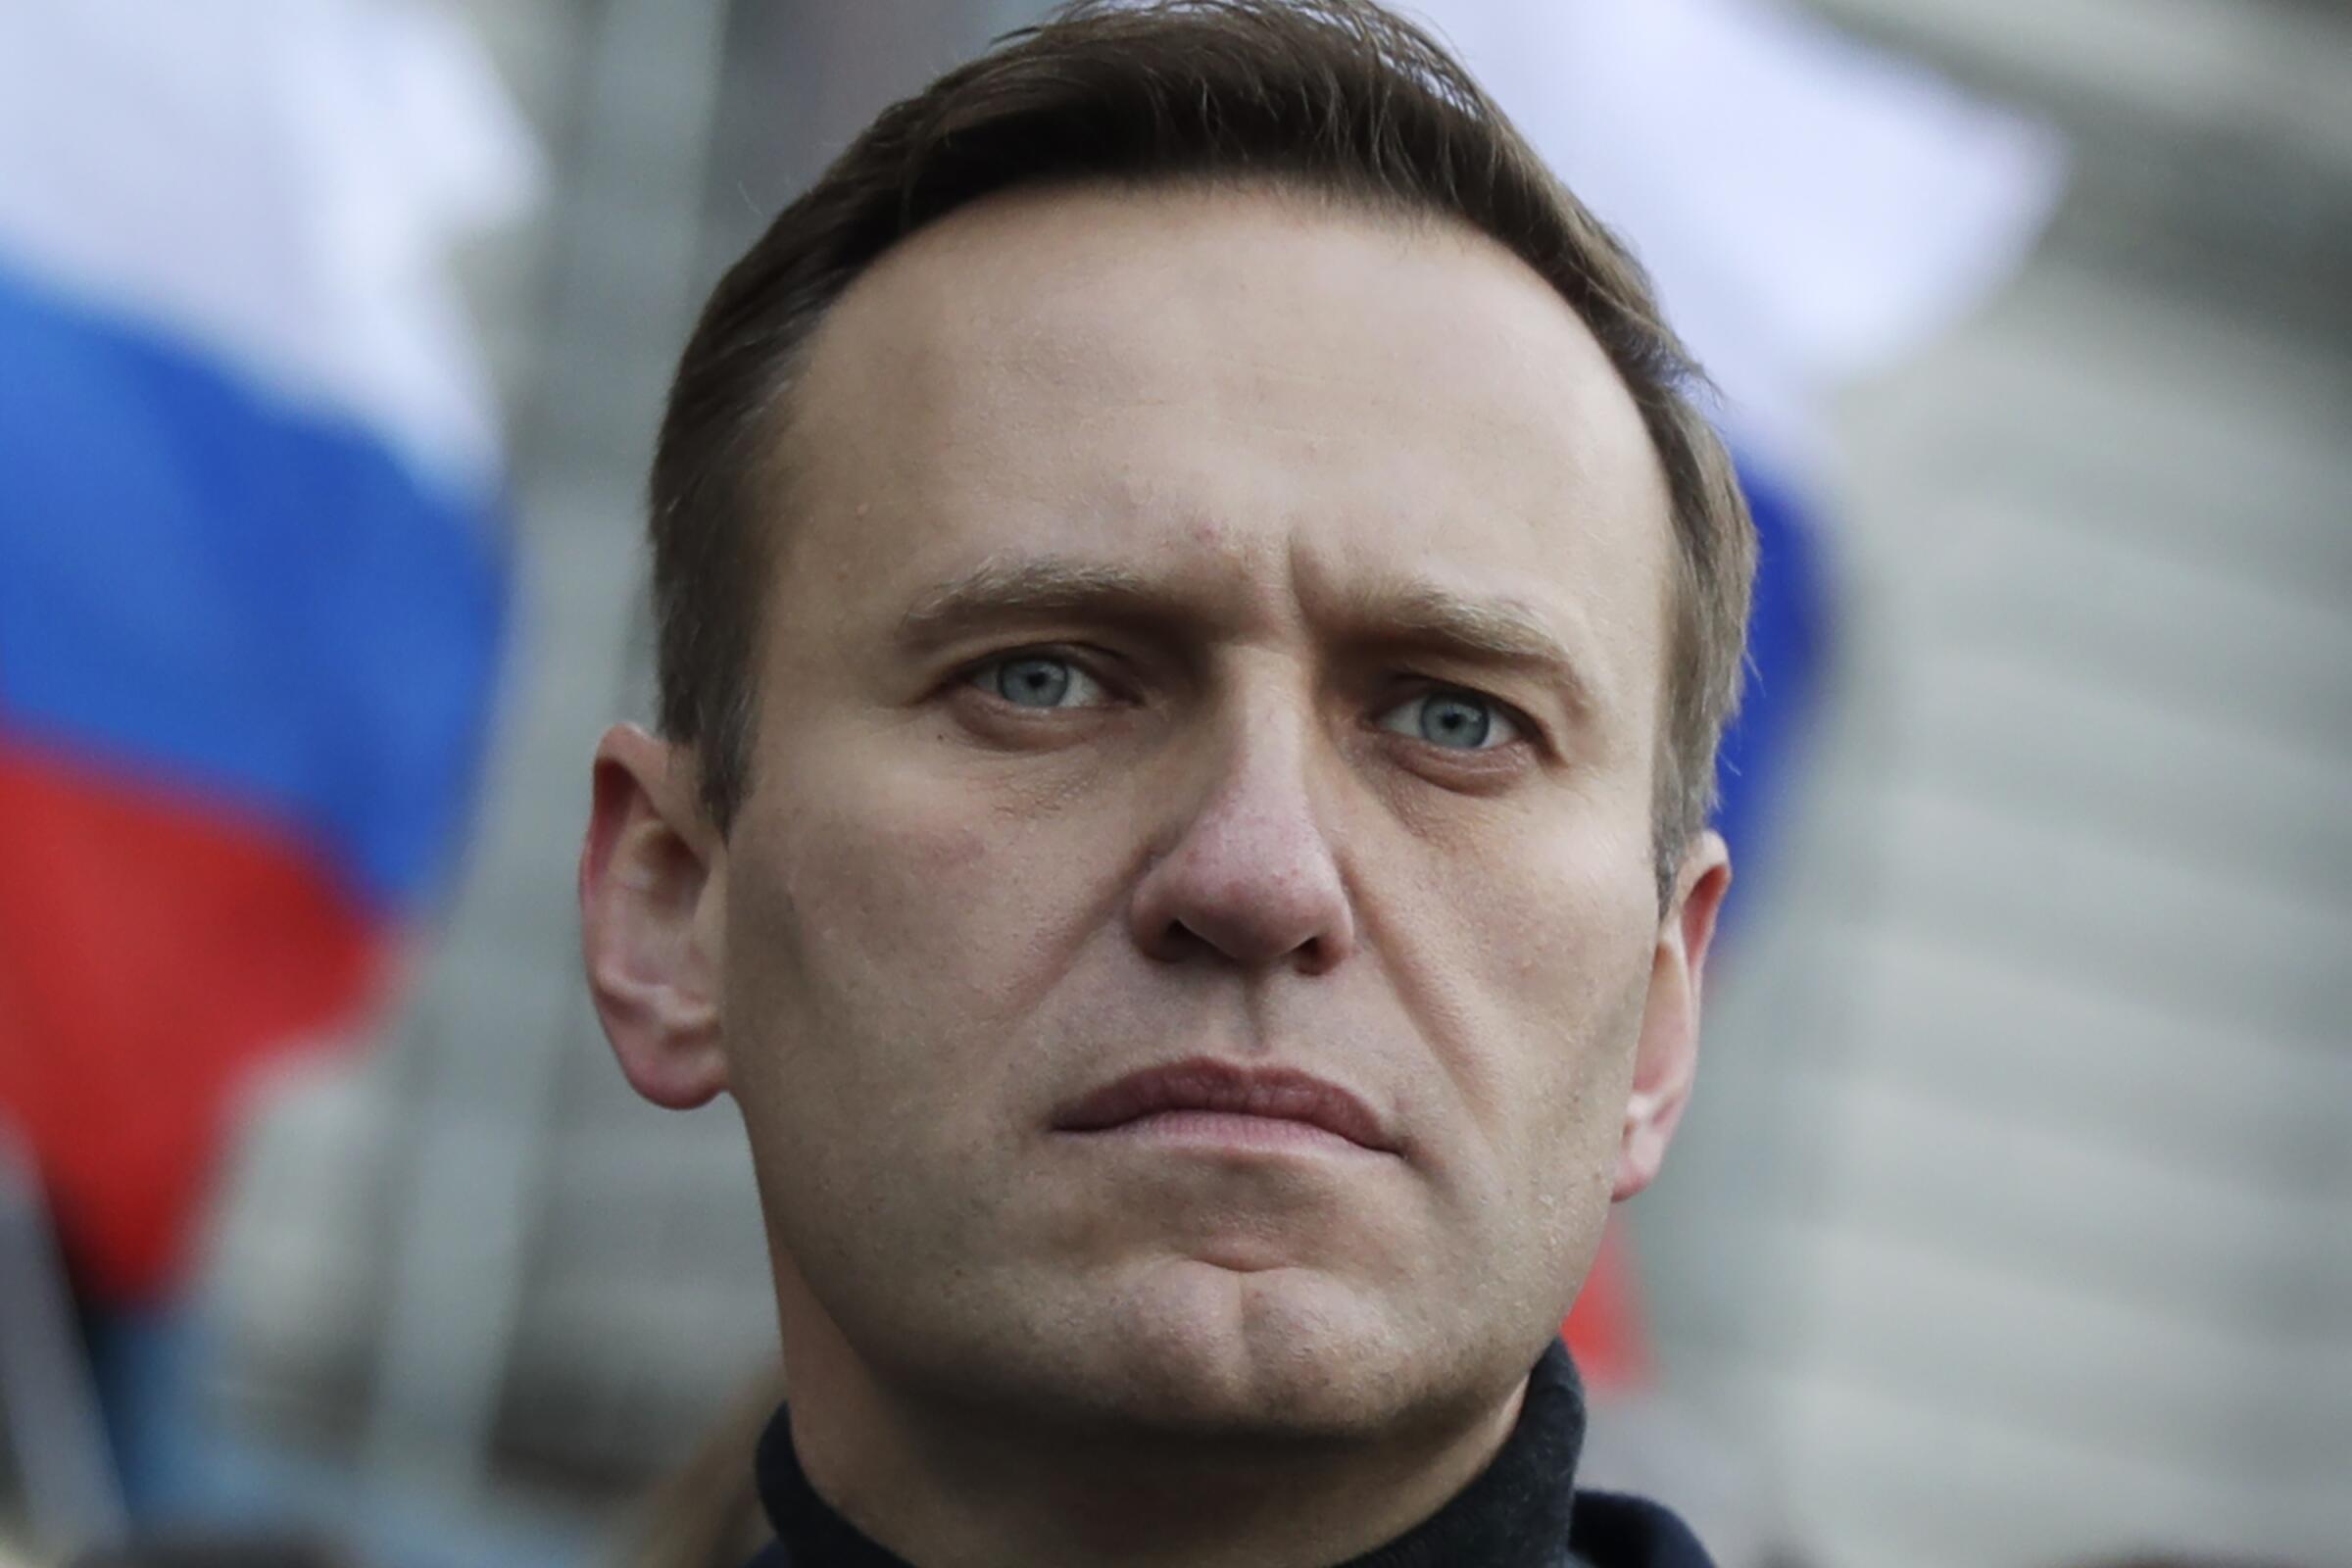 File image of Alexei Navalny